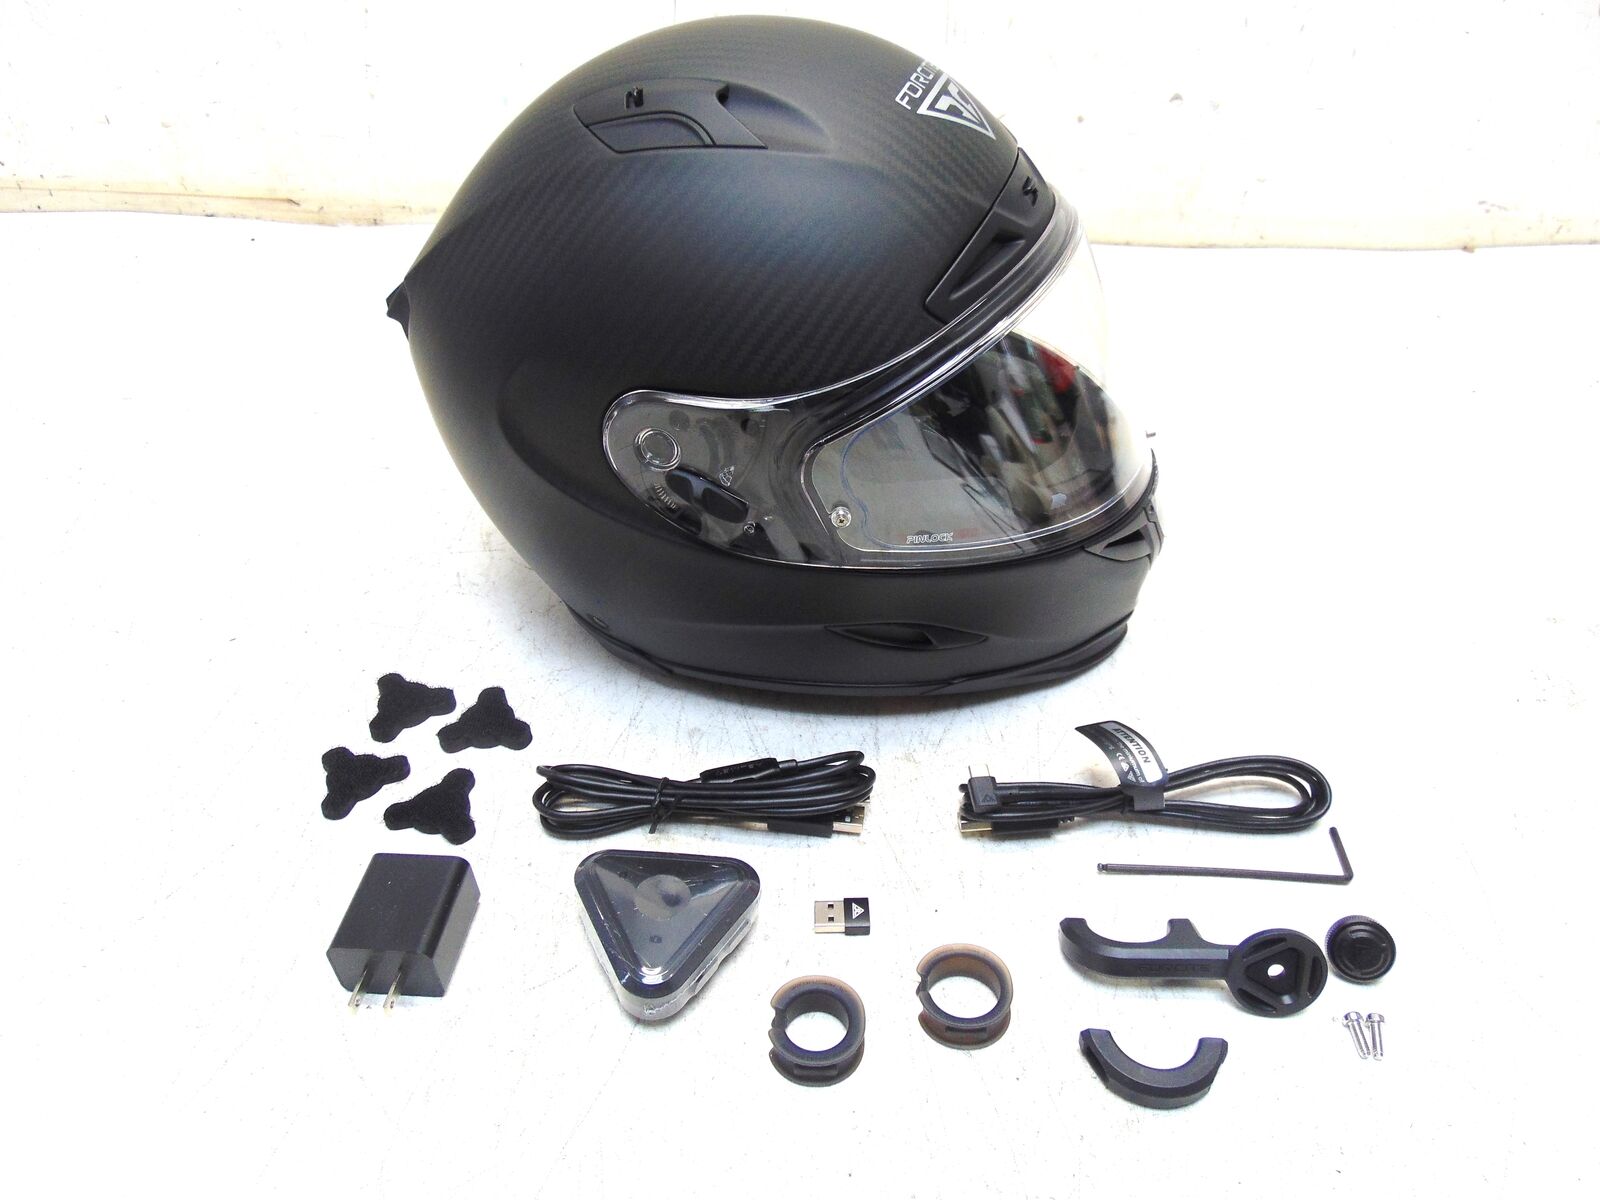 Forcite Helmet Systems MK1S Carbon Smart Helmet Matte Black XS MK1S-XS-M-USA